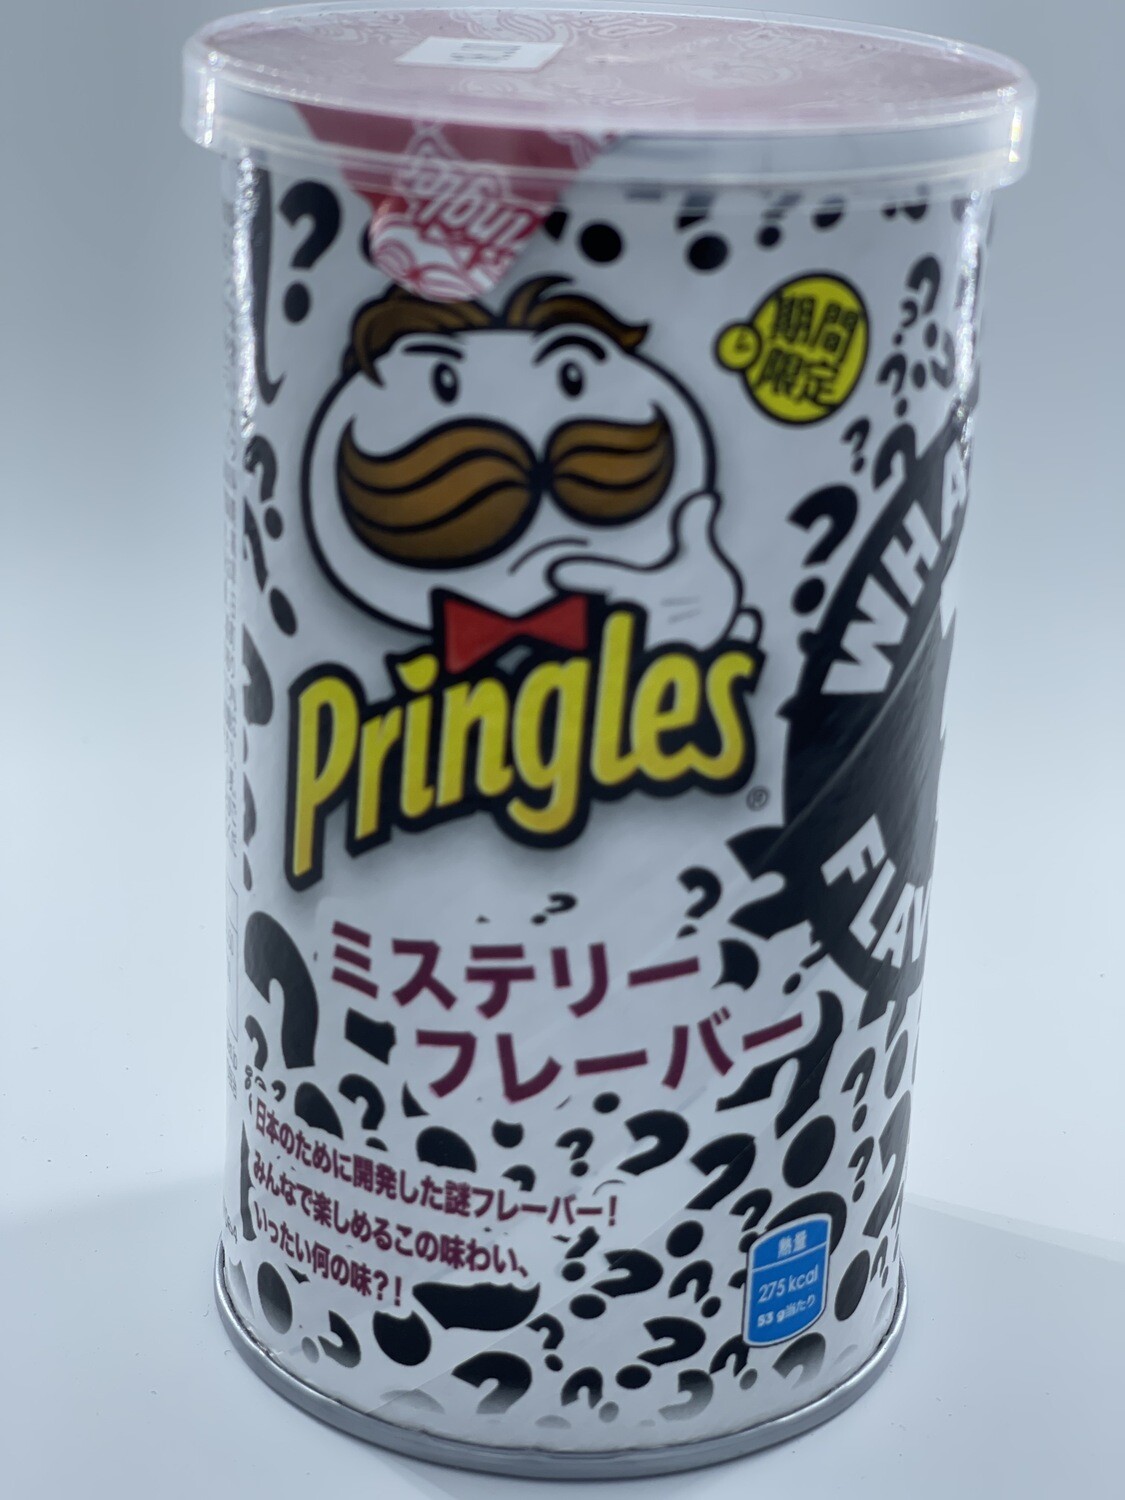 Pringles Mystery